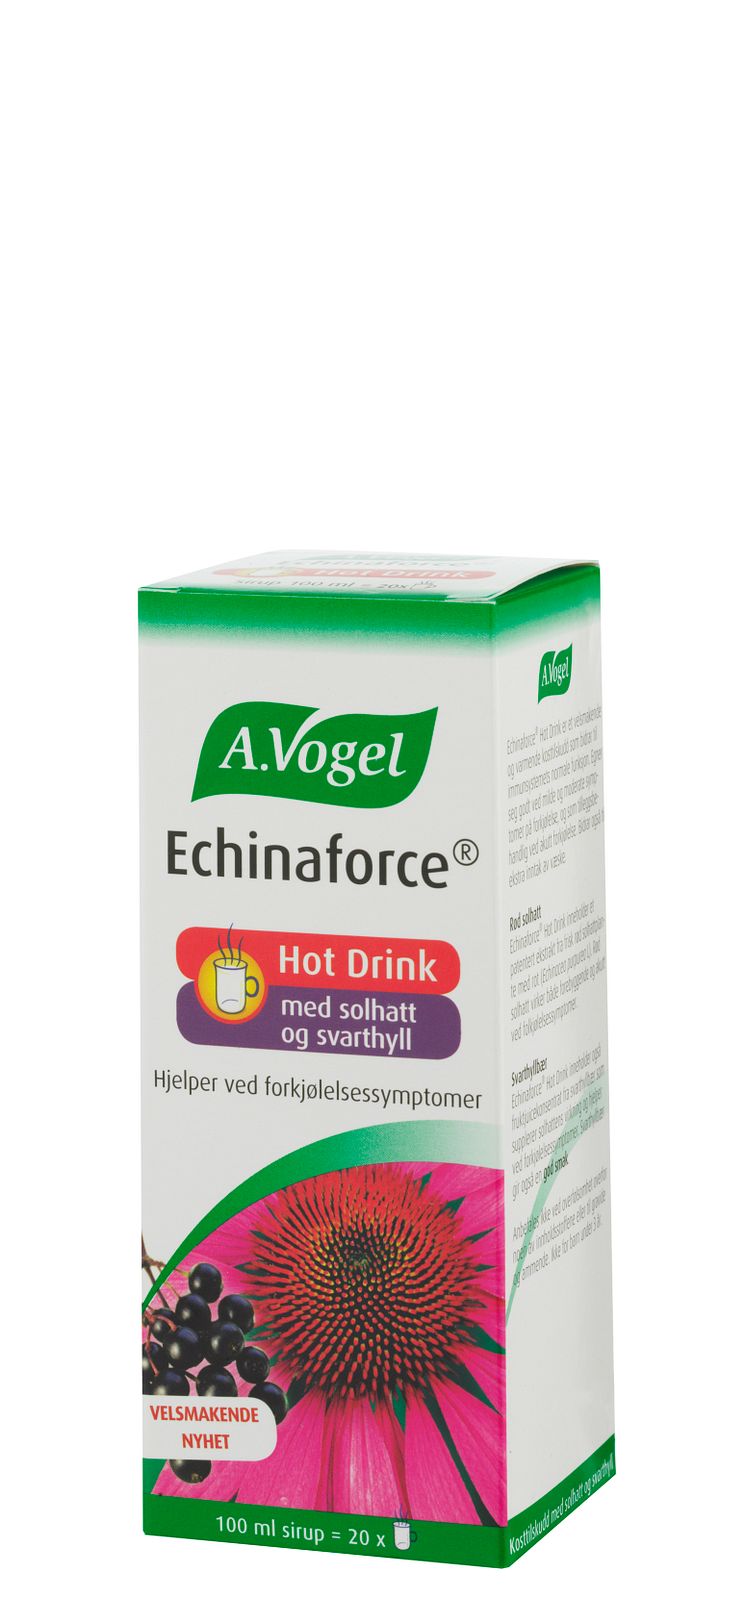 Echinaforce Hot Drink